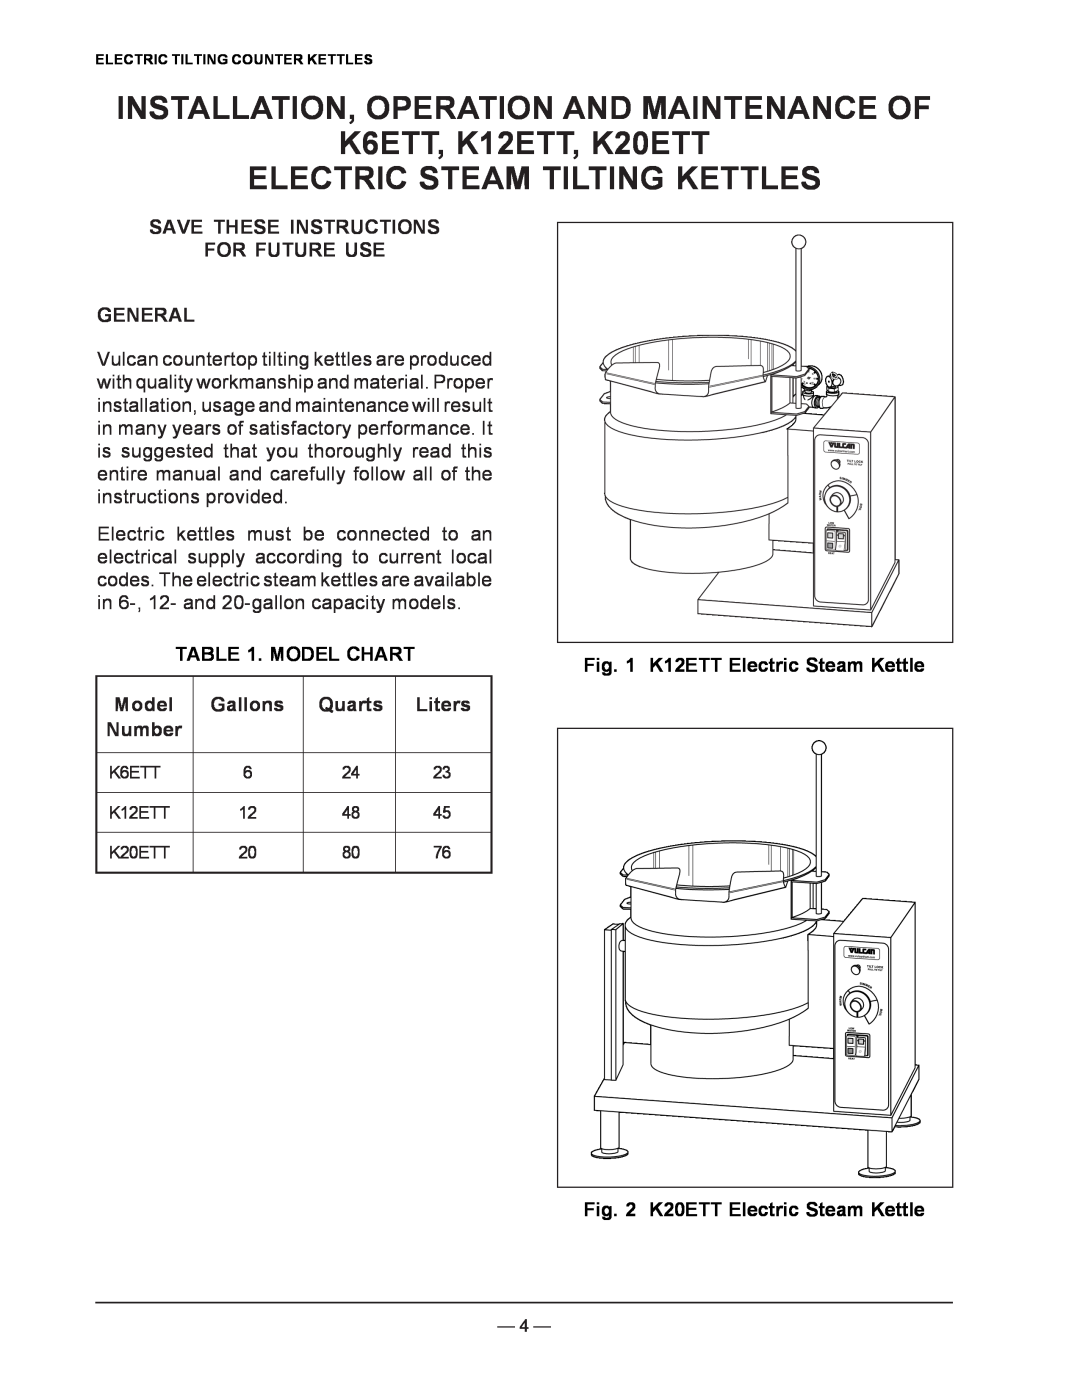 Vulcan-Hart INSTALLATION, OPERATION AND MAINTENANCE OF K6ETT, K12ETT, K20ETT, Electric Steam Tilting Kettles 